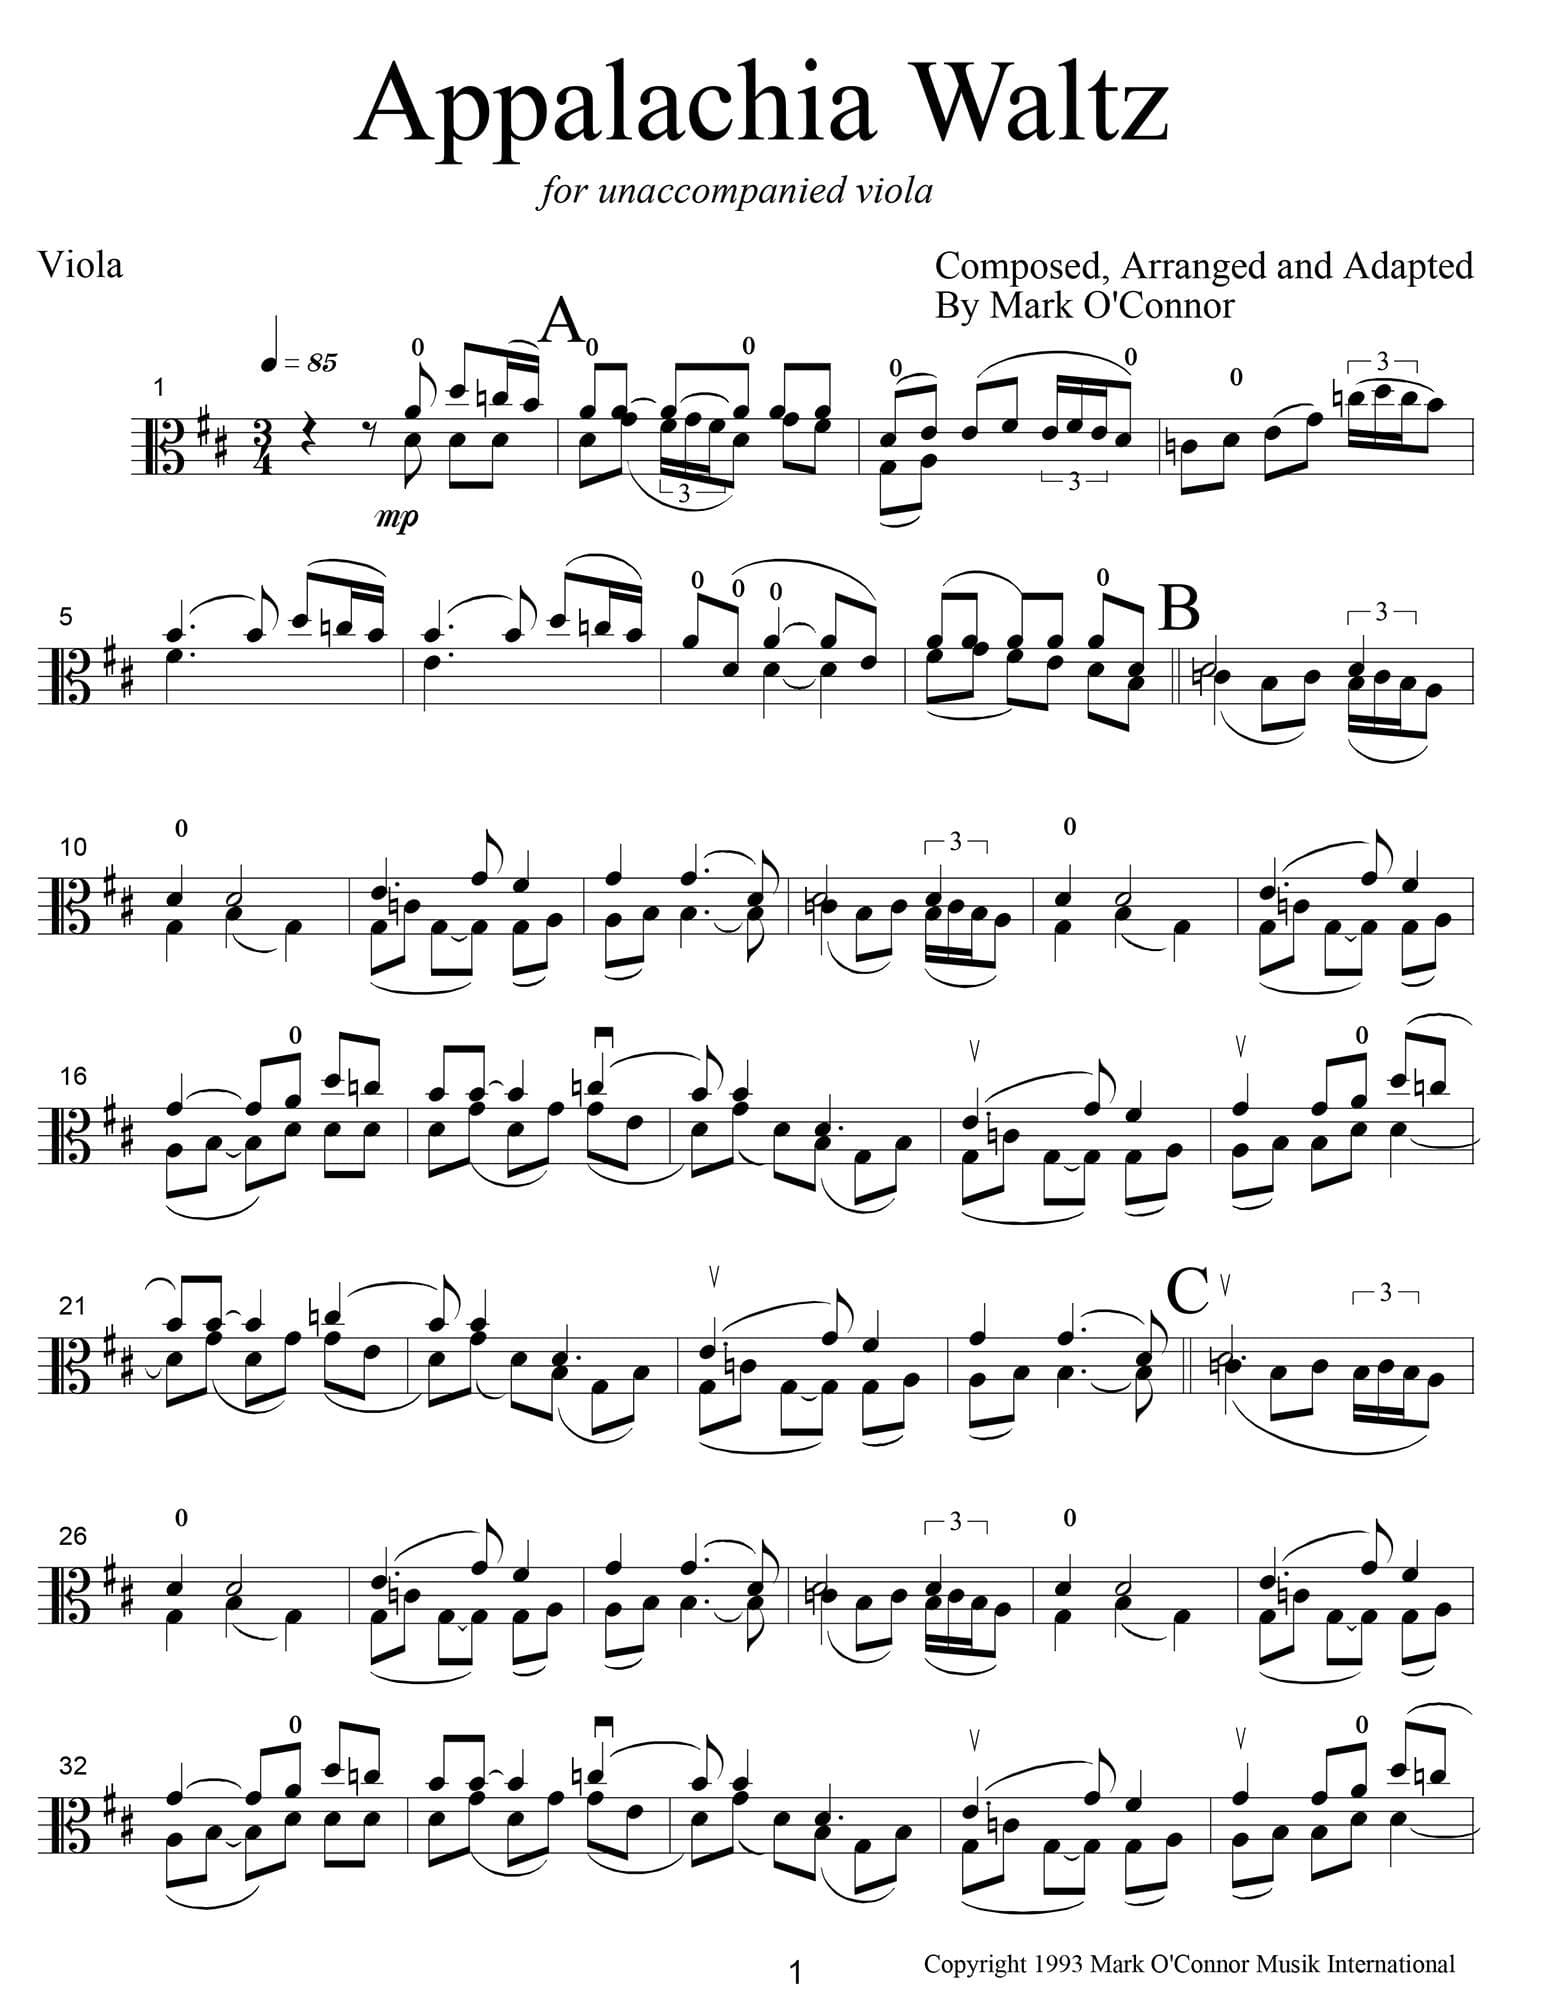 O'Connor, Mark - Appalachia Waltz Unaccompanied Score - Viola - Digital Download